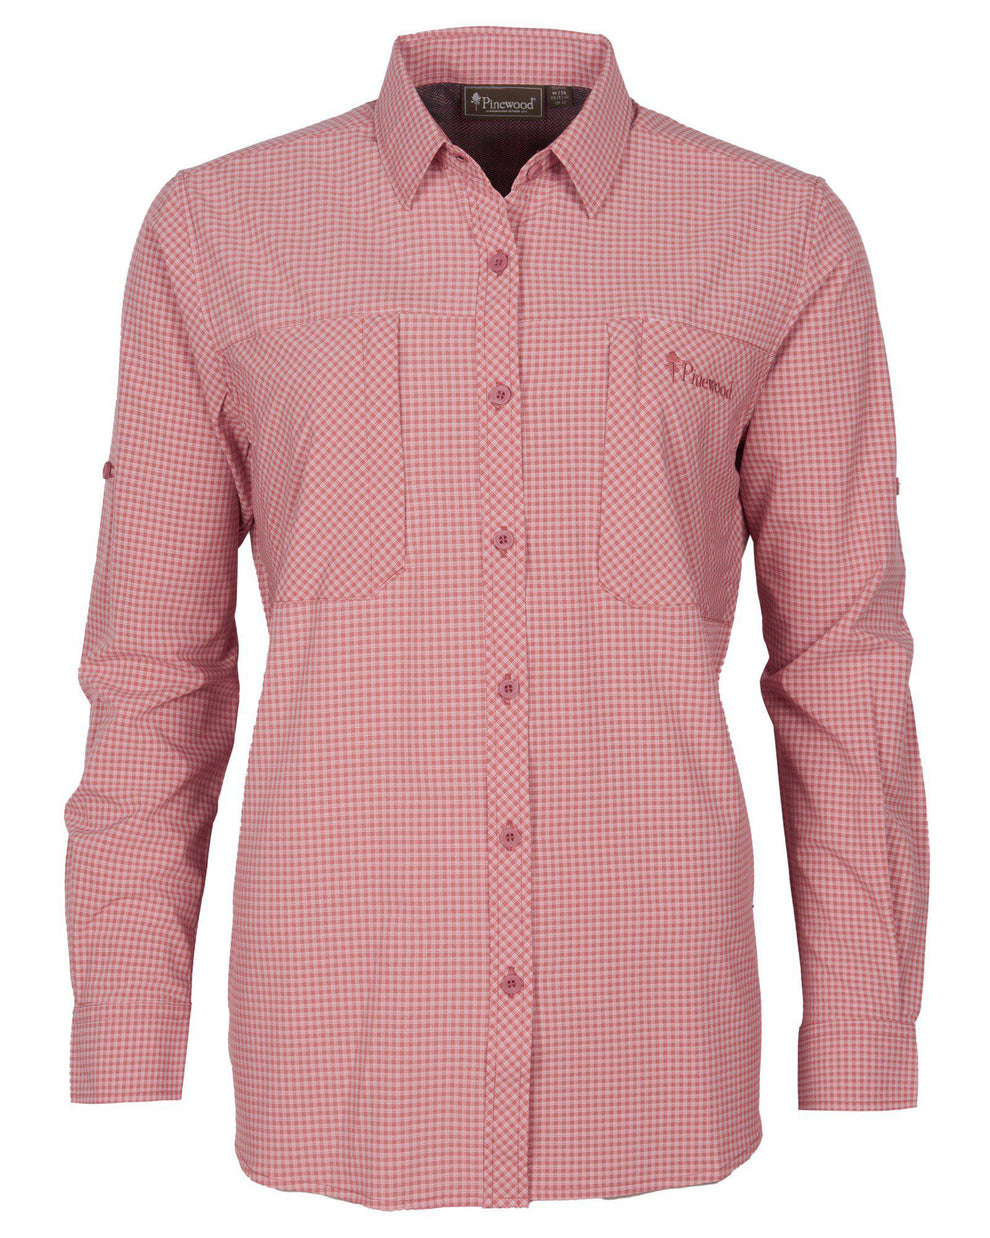 3341-834-01_Pinewood-InsectSafe-Shirt-Womens_Pink-Offwhite